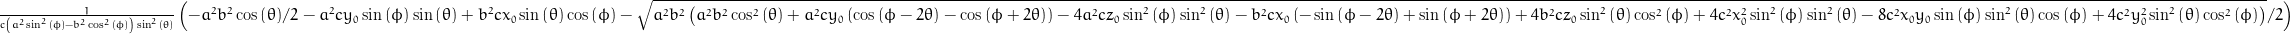 \frac{1}{c \left(a^{2} \sin^{2}{\left (\phi \right )} - b^{2} \cos^{2}{\left (\phi \right )}\right) \sin^{2}{\left (\theta \right )}} \left(- \frac{a^{2} b^{2}}{2} \cos{\left (\theta \right )} - a^{2} c y_{0} \sin{\left (\phi \right )} \sin{\left (\theta \right )} + b^{2} c x_{0} \sin{\left (\theta \right )} \cos{\left (\phi \right )} - \frac{1}{2} \sqrt{a^{2} b^{2} \left(a^{2} b^{2} \cos^{2}{\left (\theta \right )} + a^{2} c y_{0} \left(\cos{\left (\phi - 2 \theta \right )} - \cos{\left (\phi + 2 \theta \right )}\right) - 4 a^{2} c z_{0} \sin^{2}{\left (\phi \right )} \sin^{2}{\left (\theta \right )} - b^{2} c x_{0} \left(- \sin{\left (\phi - 2 \theta \right )} + \sin{\left (\phi + 2 \theta \right )}\right) + 4 b^{2} c z_{0} \sin^{2}{\left (\theta \right )} \cos^{2}{\left (\phi \right )} + 4 c^{2} x_{0}^{2} \sin^{2}{\left (\phi \right )} \sin^{2}{\left (\theta \right )} - 8 c^{2} x_{0} y_{0} \sin{\left (\phi \right )} \sin^{2}{\left (\theta \right )} \cos{\left (\phi \right )} + 4 c^{2} y_{0}^{2} \sin^{2}{\left (\theta \right )} \cos^{2}{\left (\phi \right )}\right)}\right)